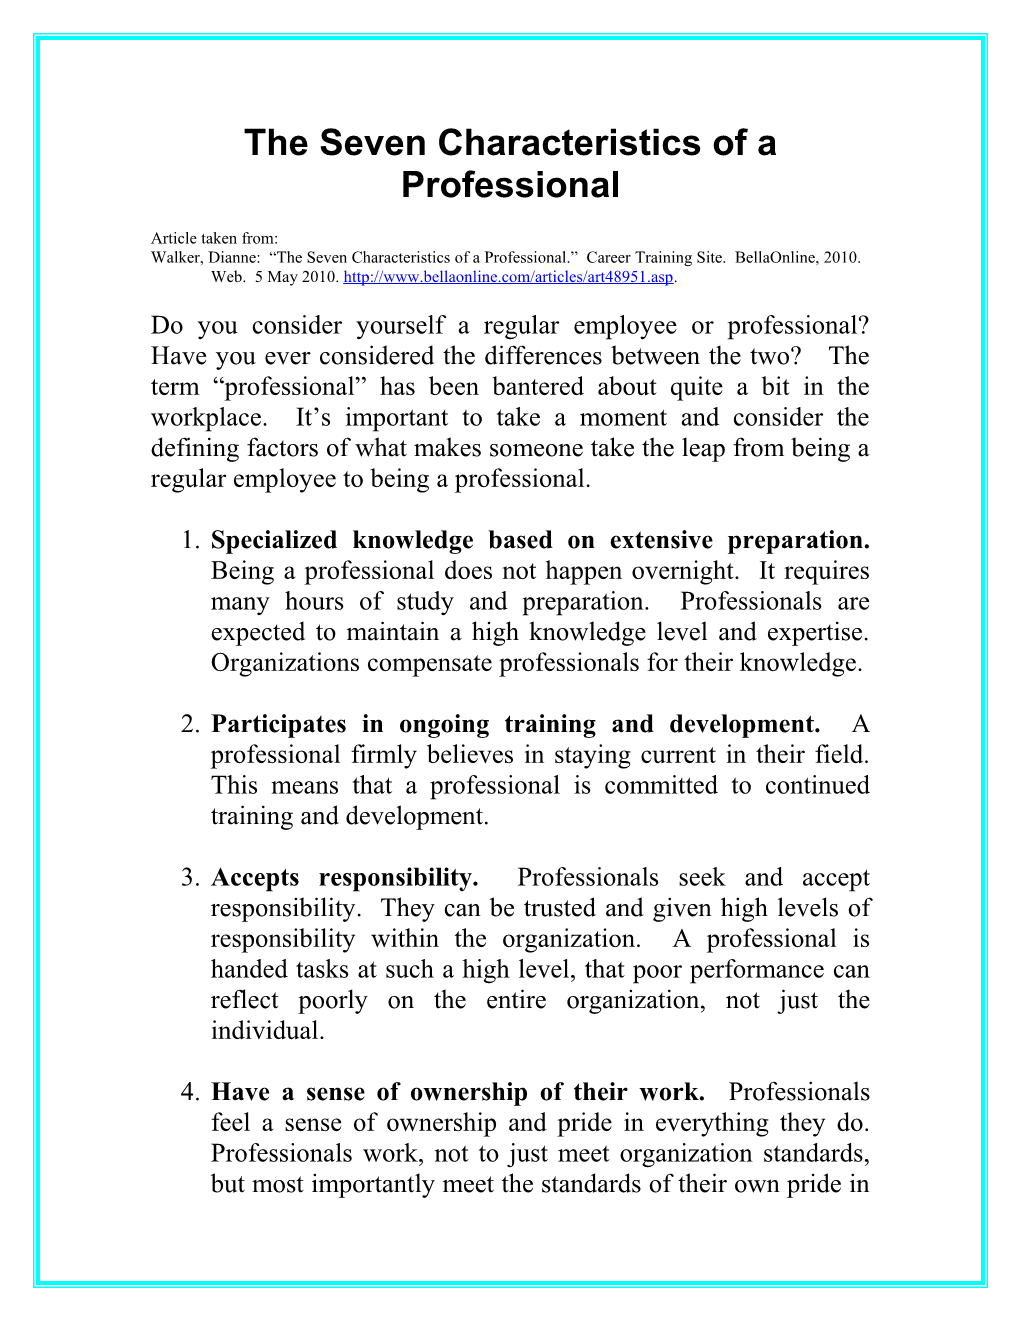 The Seven Characteristics of a Professional